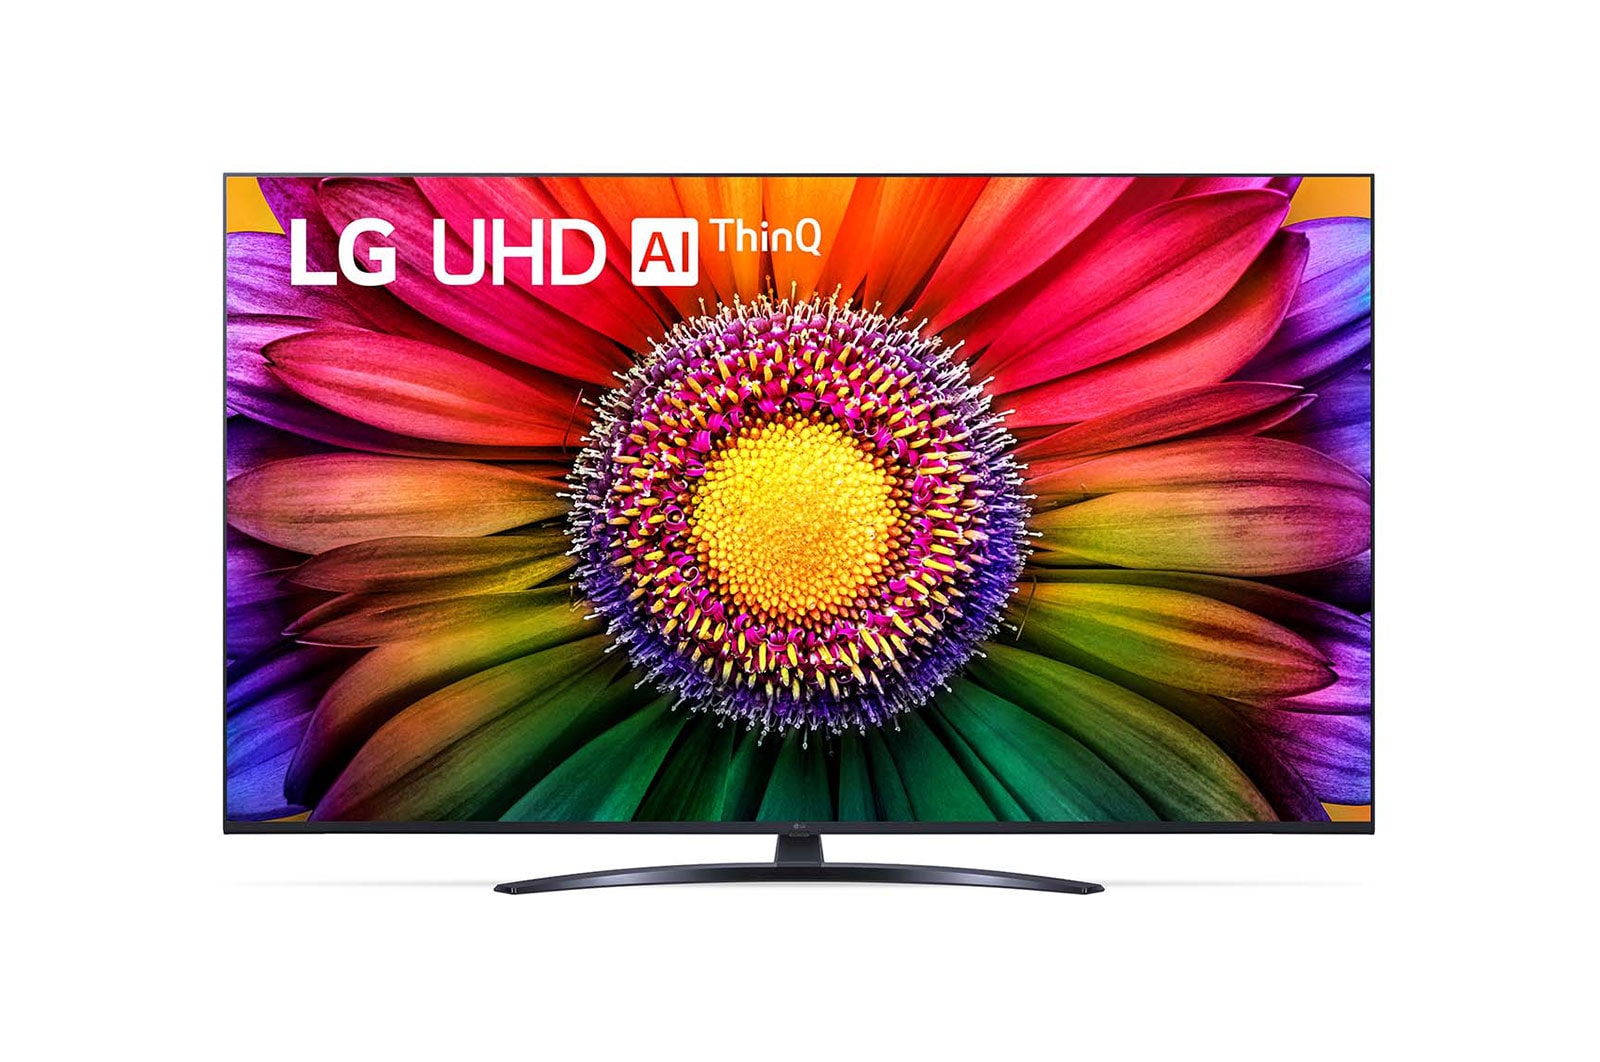 LG UR81 50 inch 4K Smart UHD TV with Al Sound Pro, 50UR81006LJ